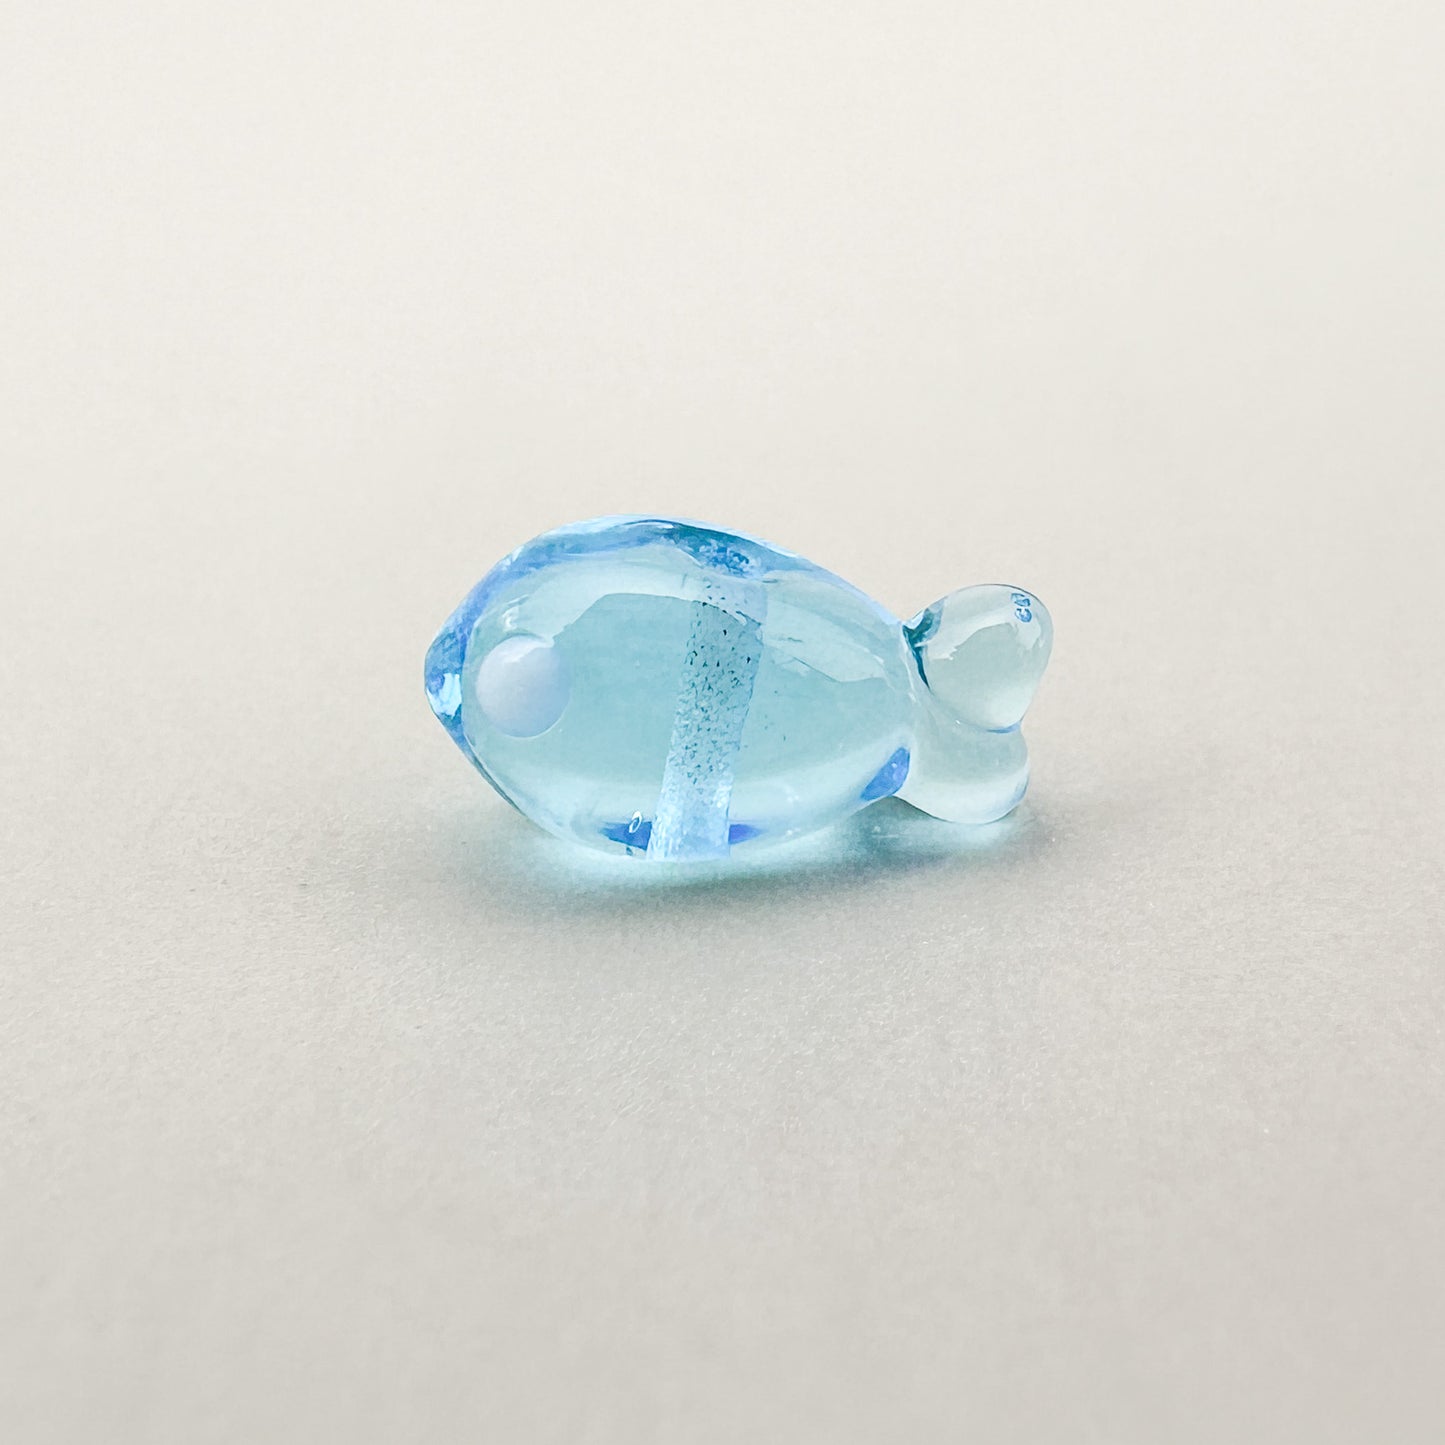 Chibi Handmade Glass Beads Fish (2 Color Options) - 1 pc. (LB178)